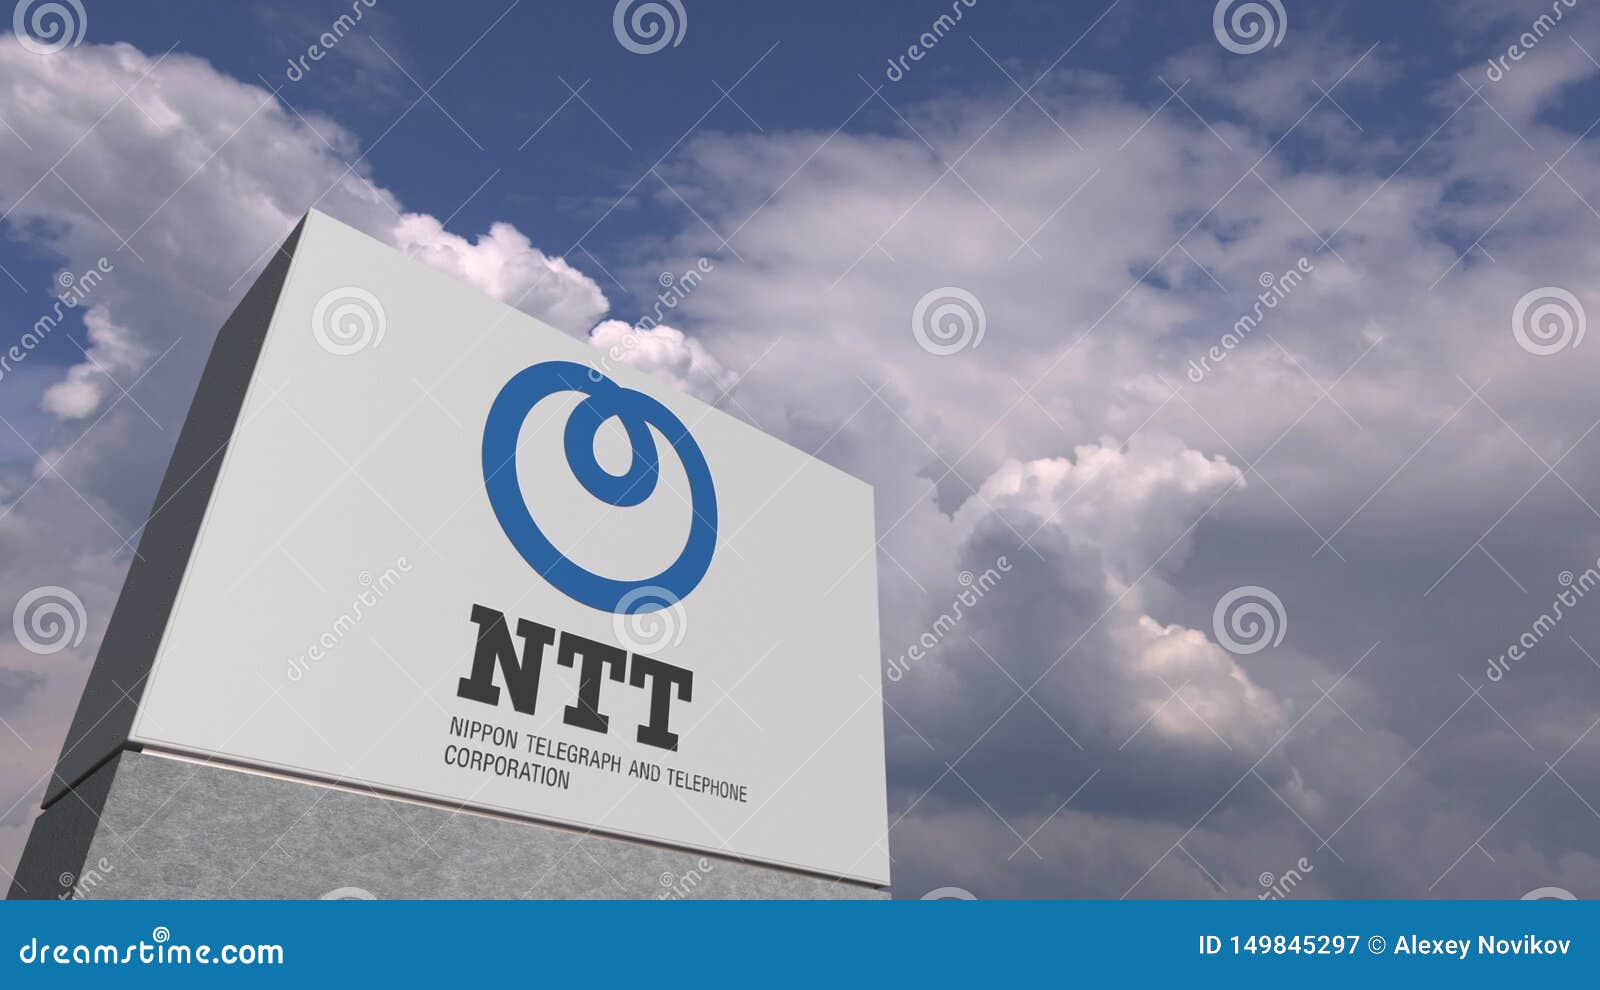 Эмблема НТТ. Корпорация Nippon Graphite Fiber Corp. Nippon Corporation пирамида. NTT. Phone corporation